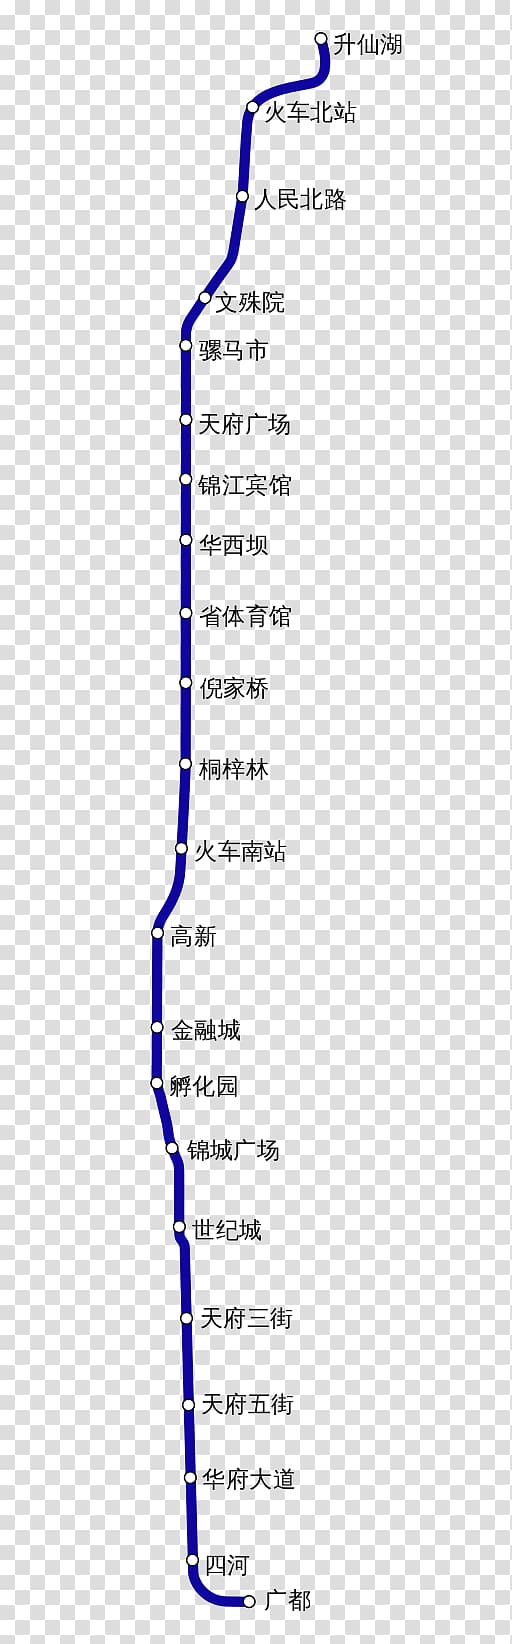 Chengdu Metro Line 1 Rapid transit Shanghai Metro, chengdu transparent background PNG clipart